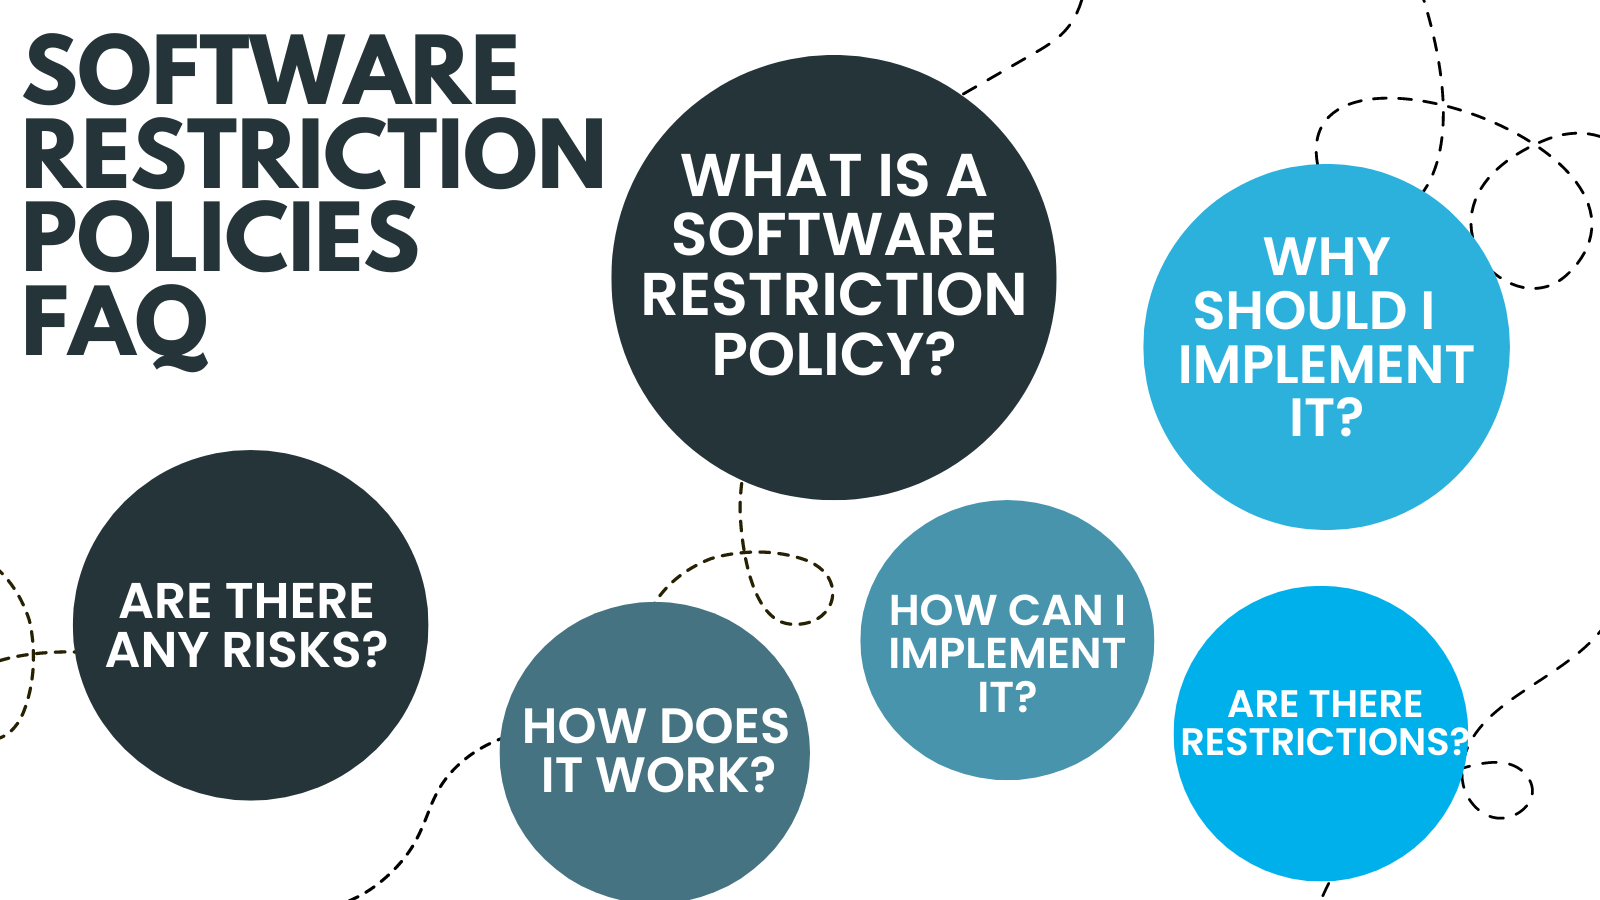 Software Restriction Policies FAQ